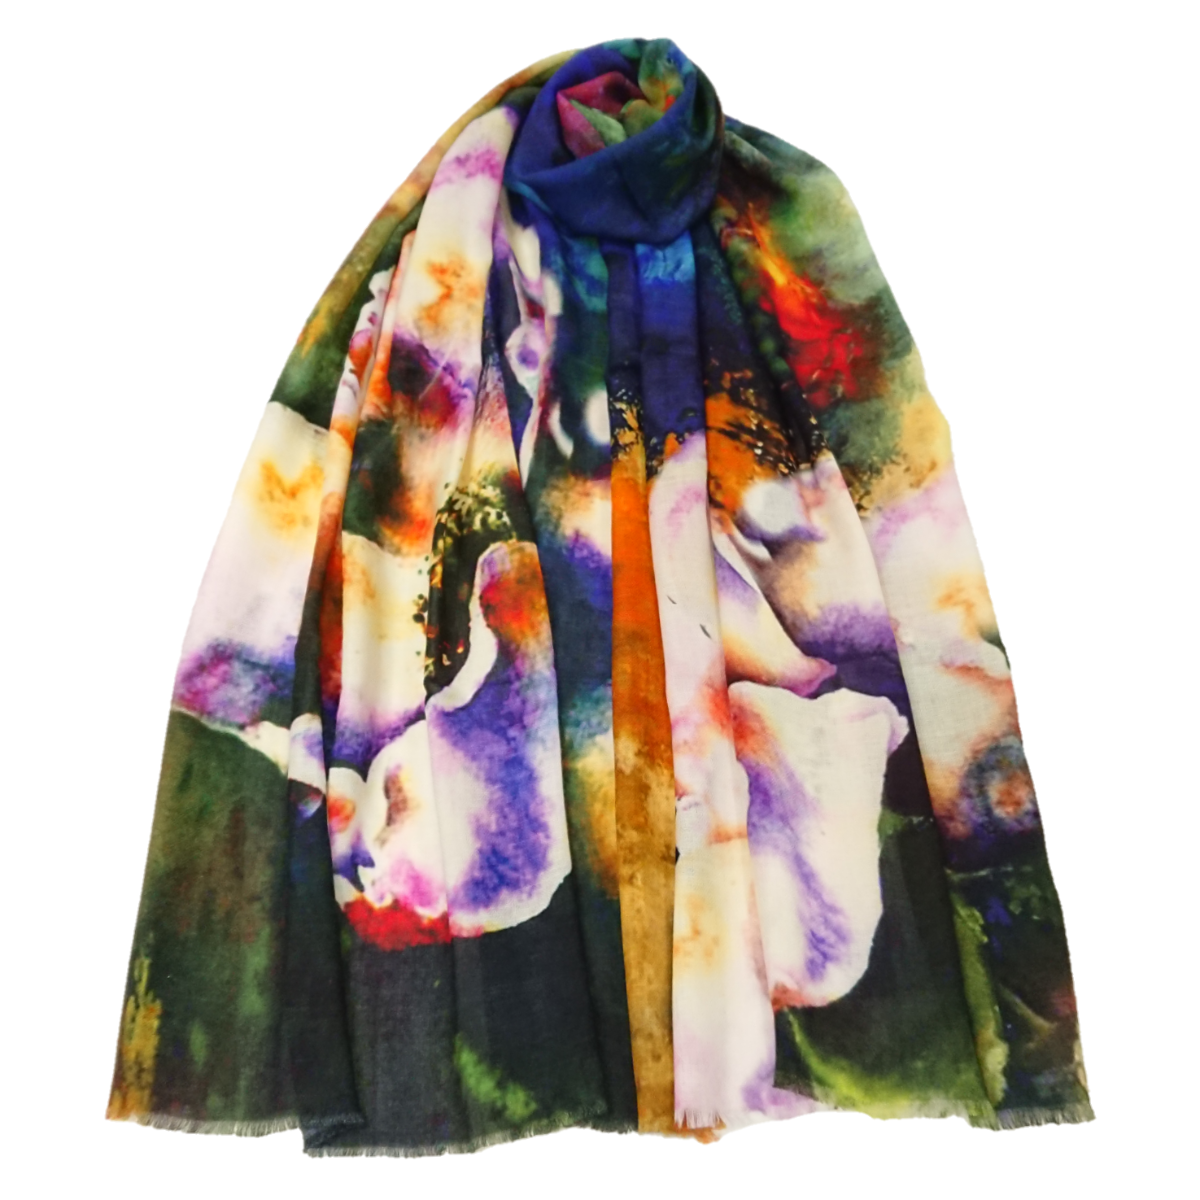 Ltd Edition 100% Pure Pashmina Cashmere Stole - Large Scarf - Colours Splash and Flowers Print